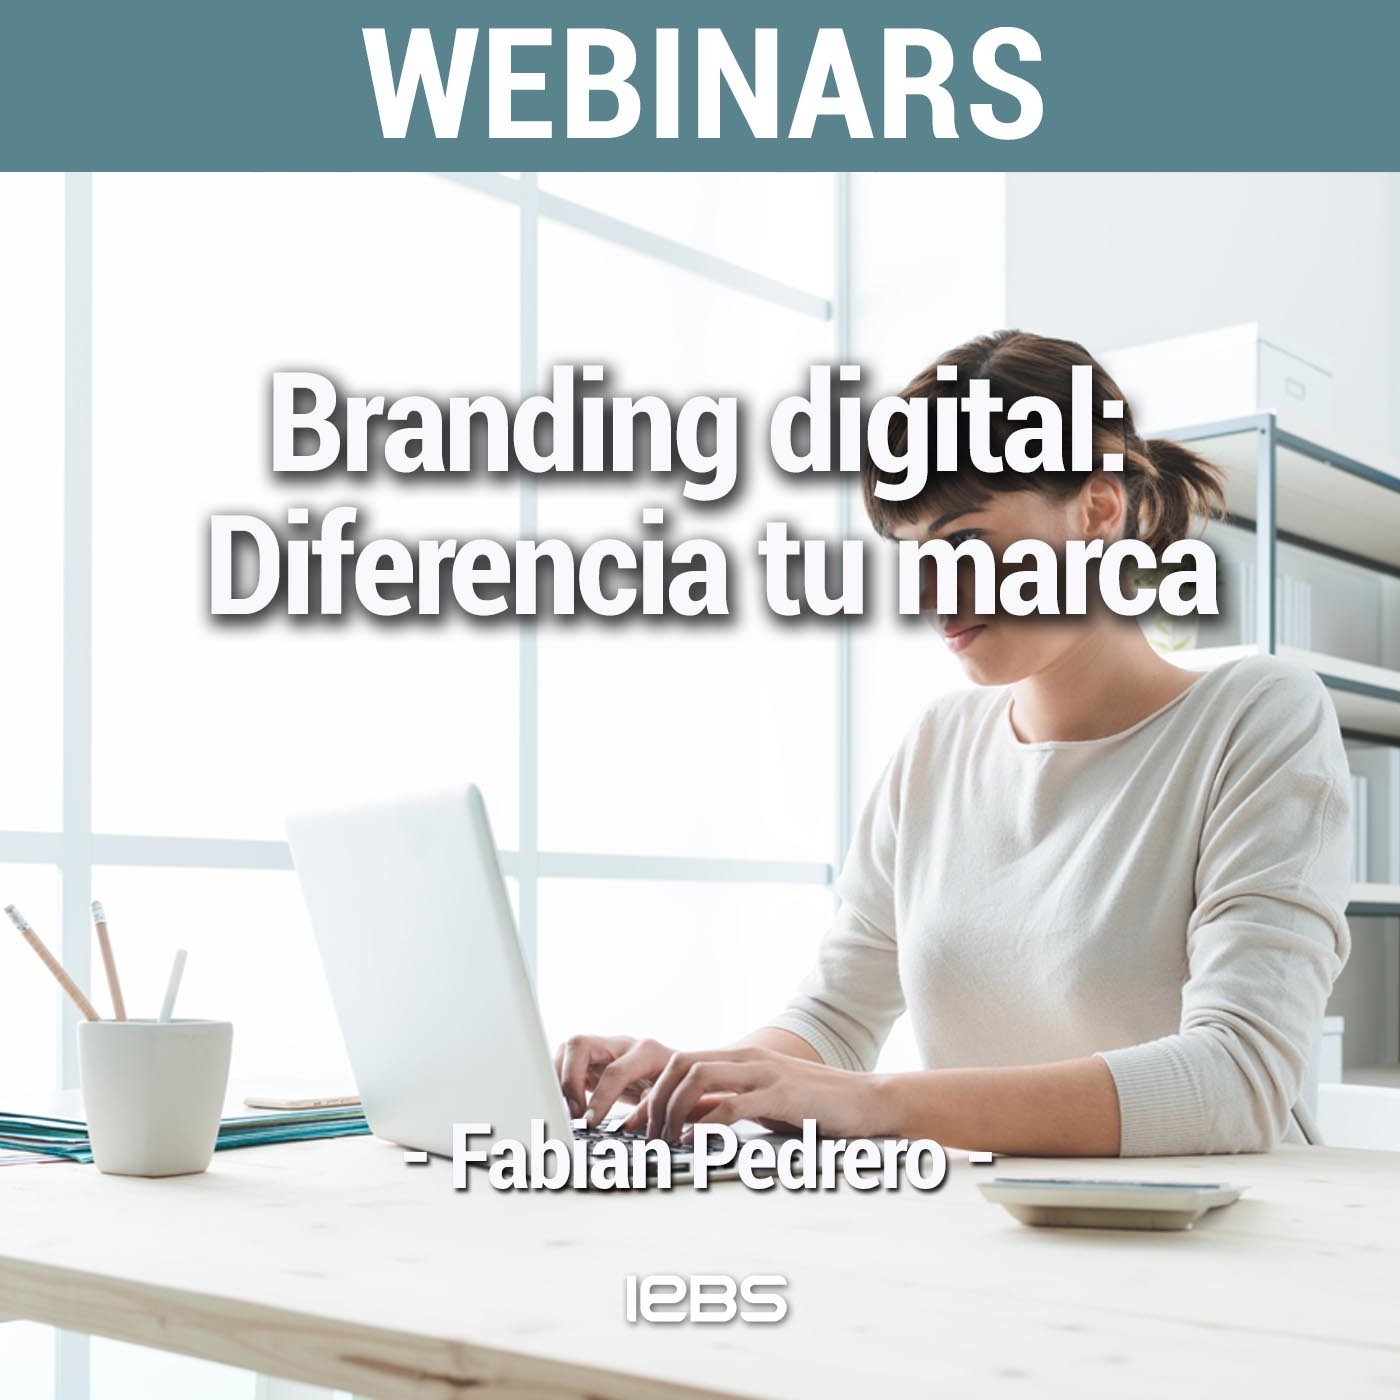 Webinar "Branding digital: diferencia tu marca" de Akademus from IEBS